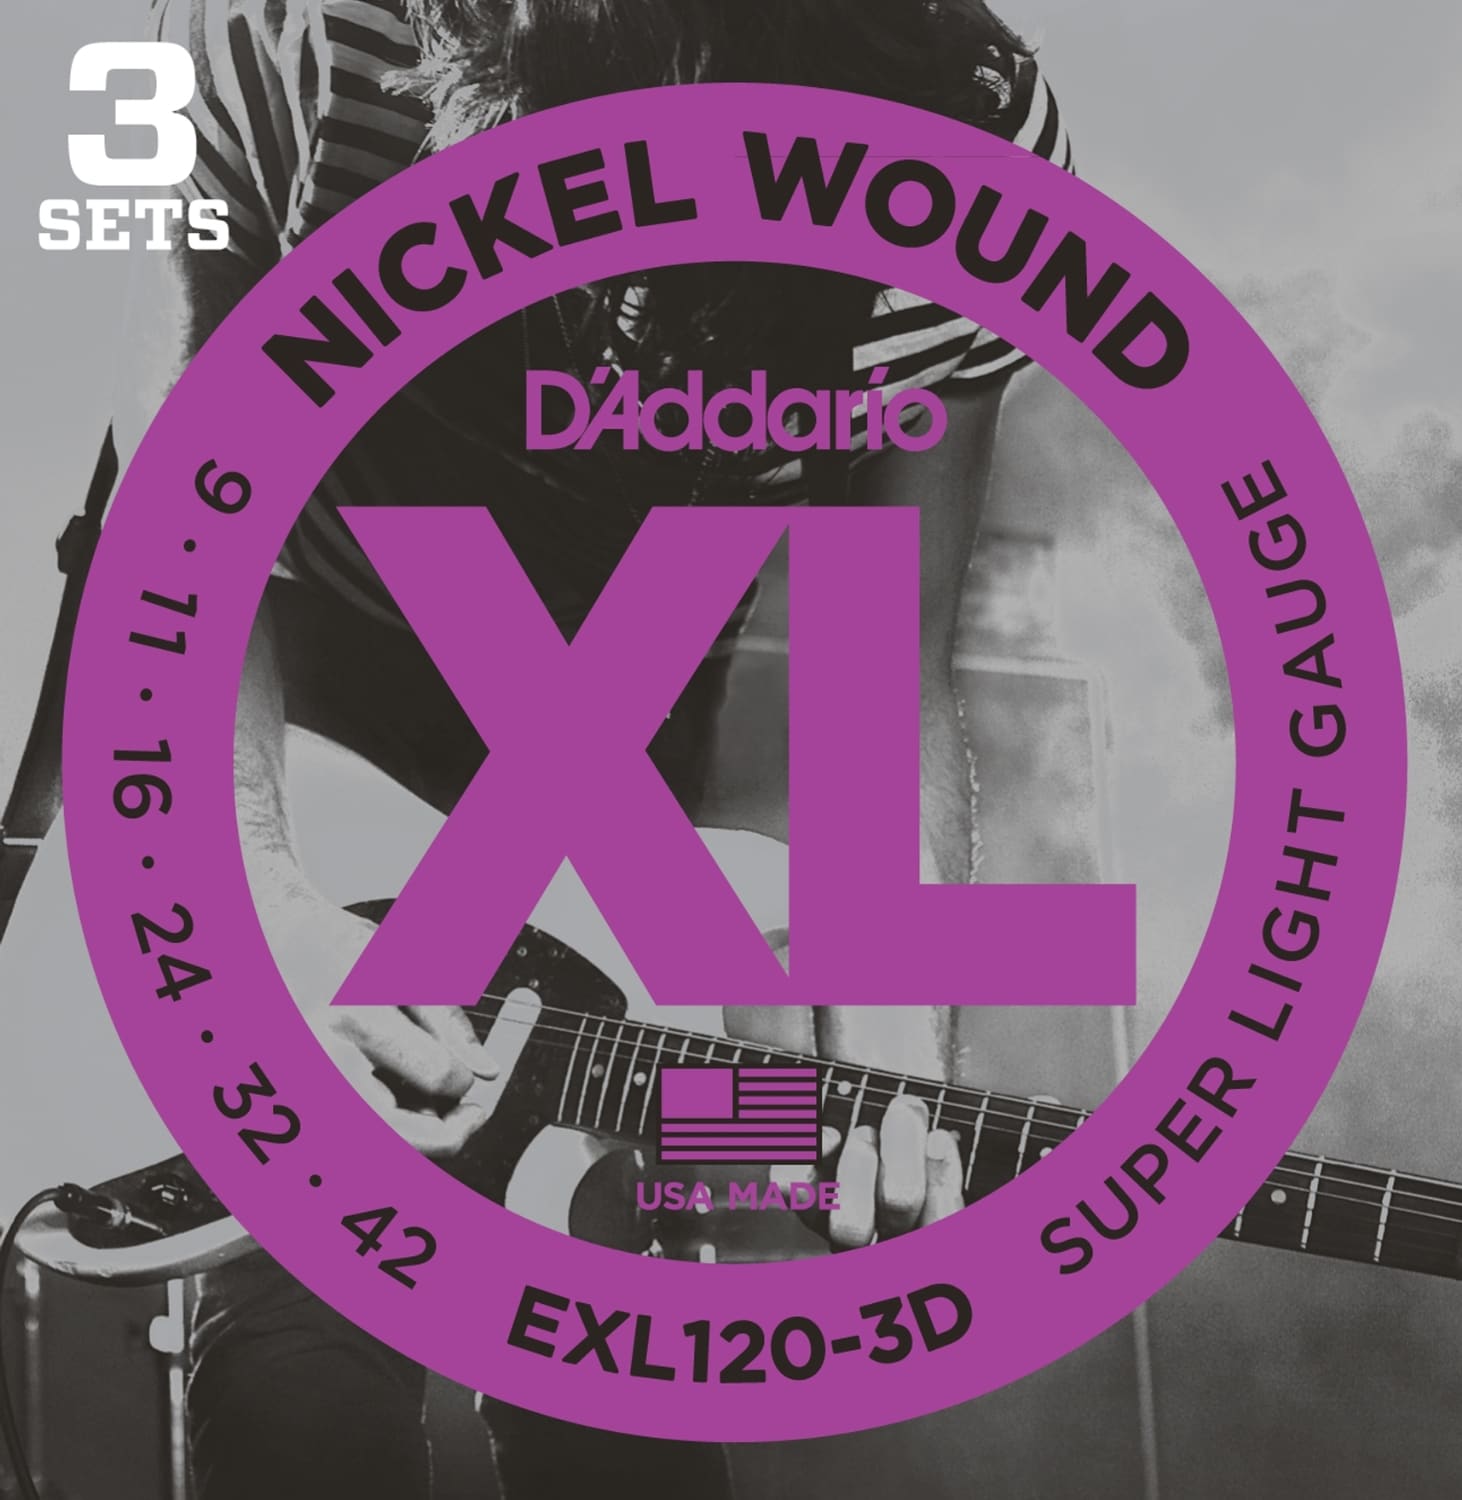 D’Addario EXL120-3D Nickel Wound Electric Guitar Strings – Super Light – 9-42 – 3 Sets 1